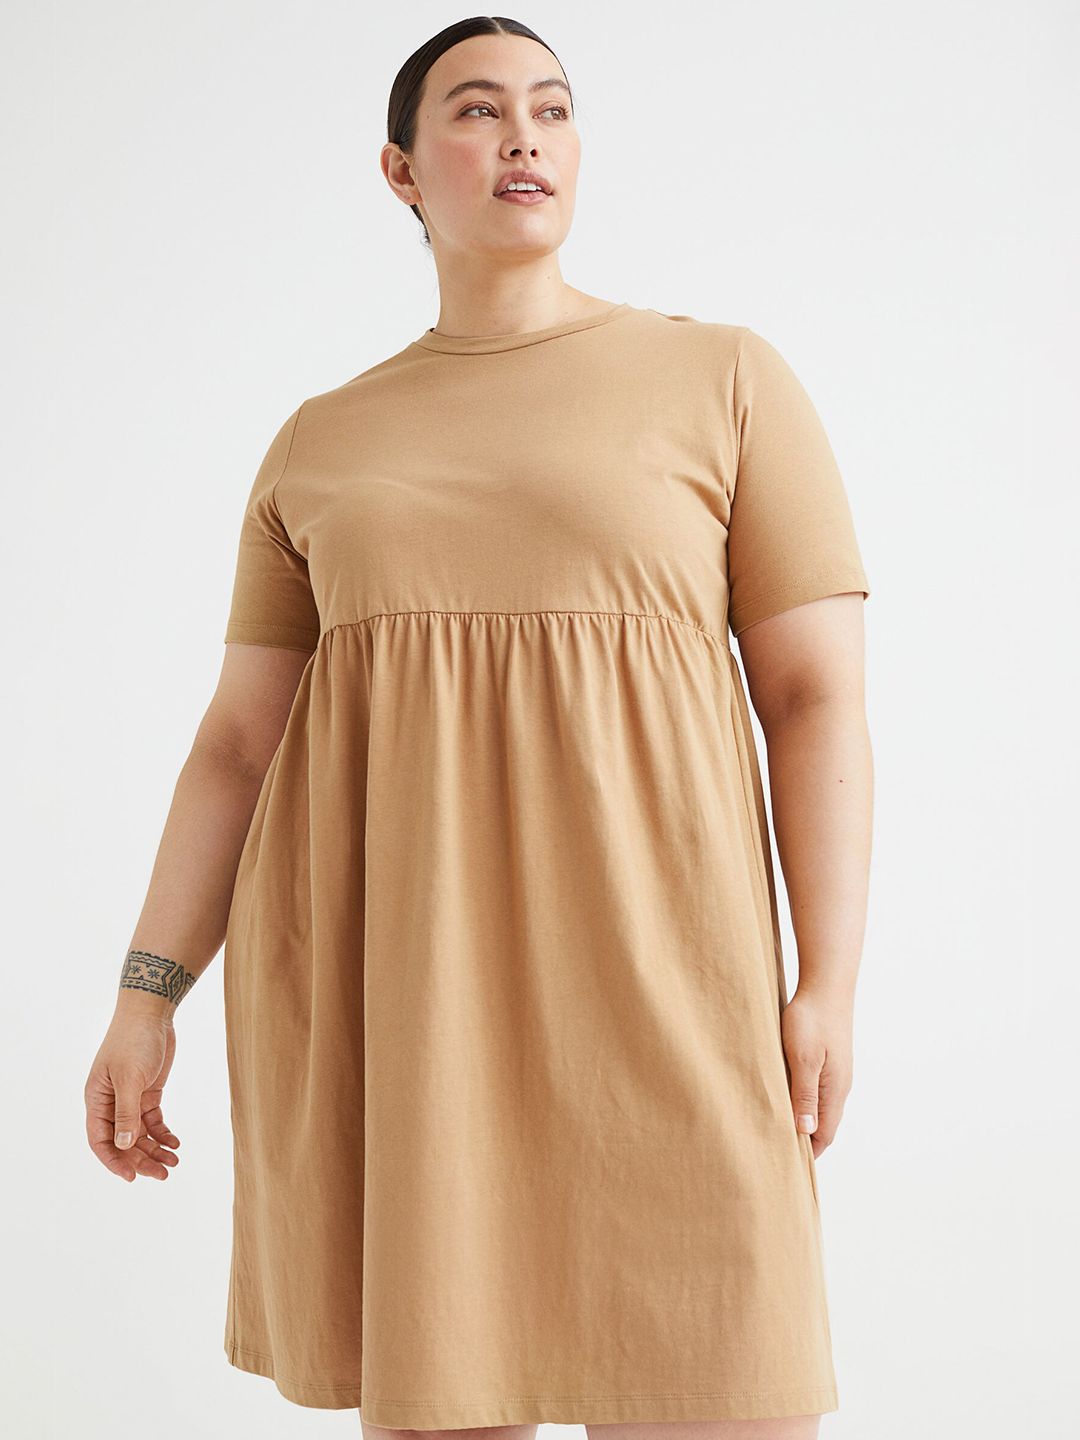 H&M Women Beige Cotton Jersey Dress Price in India